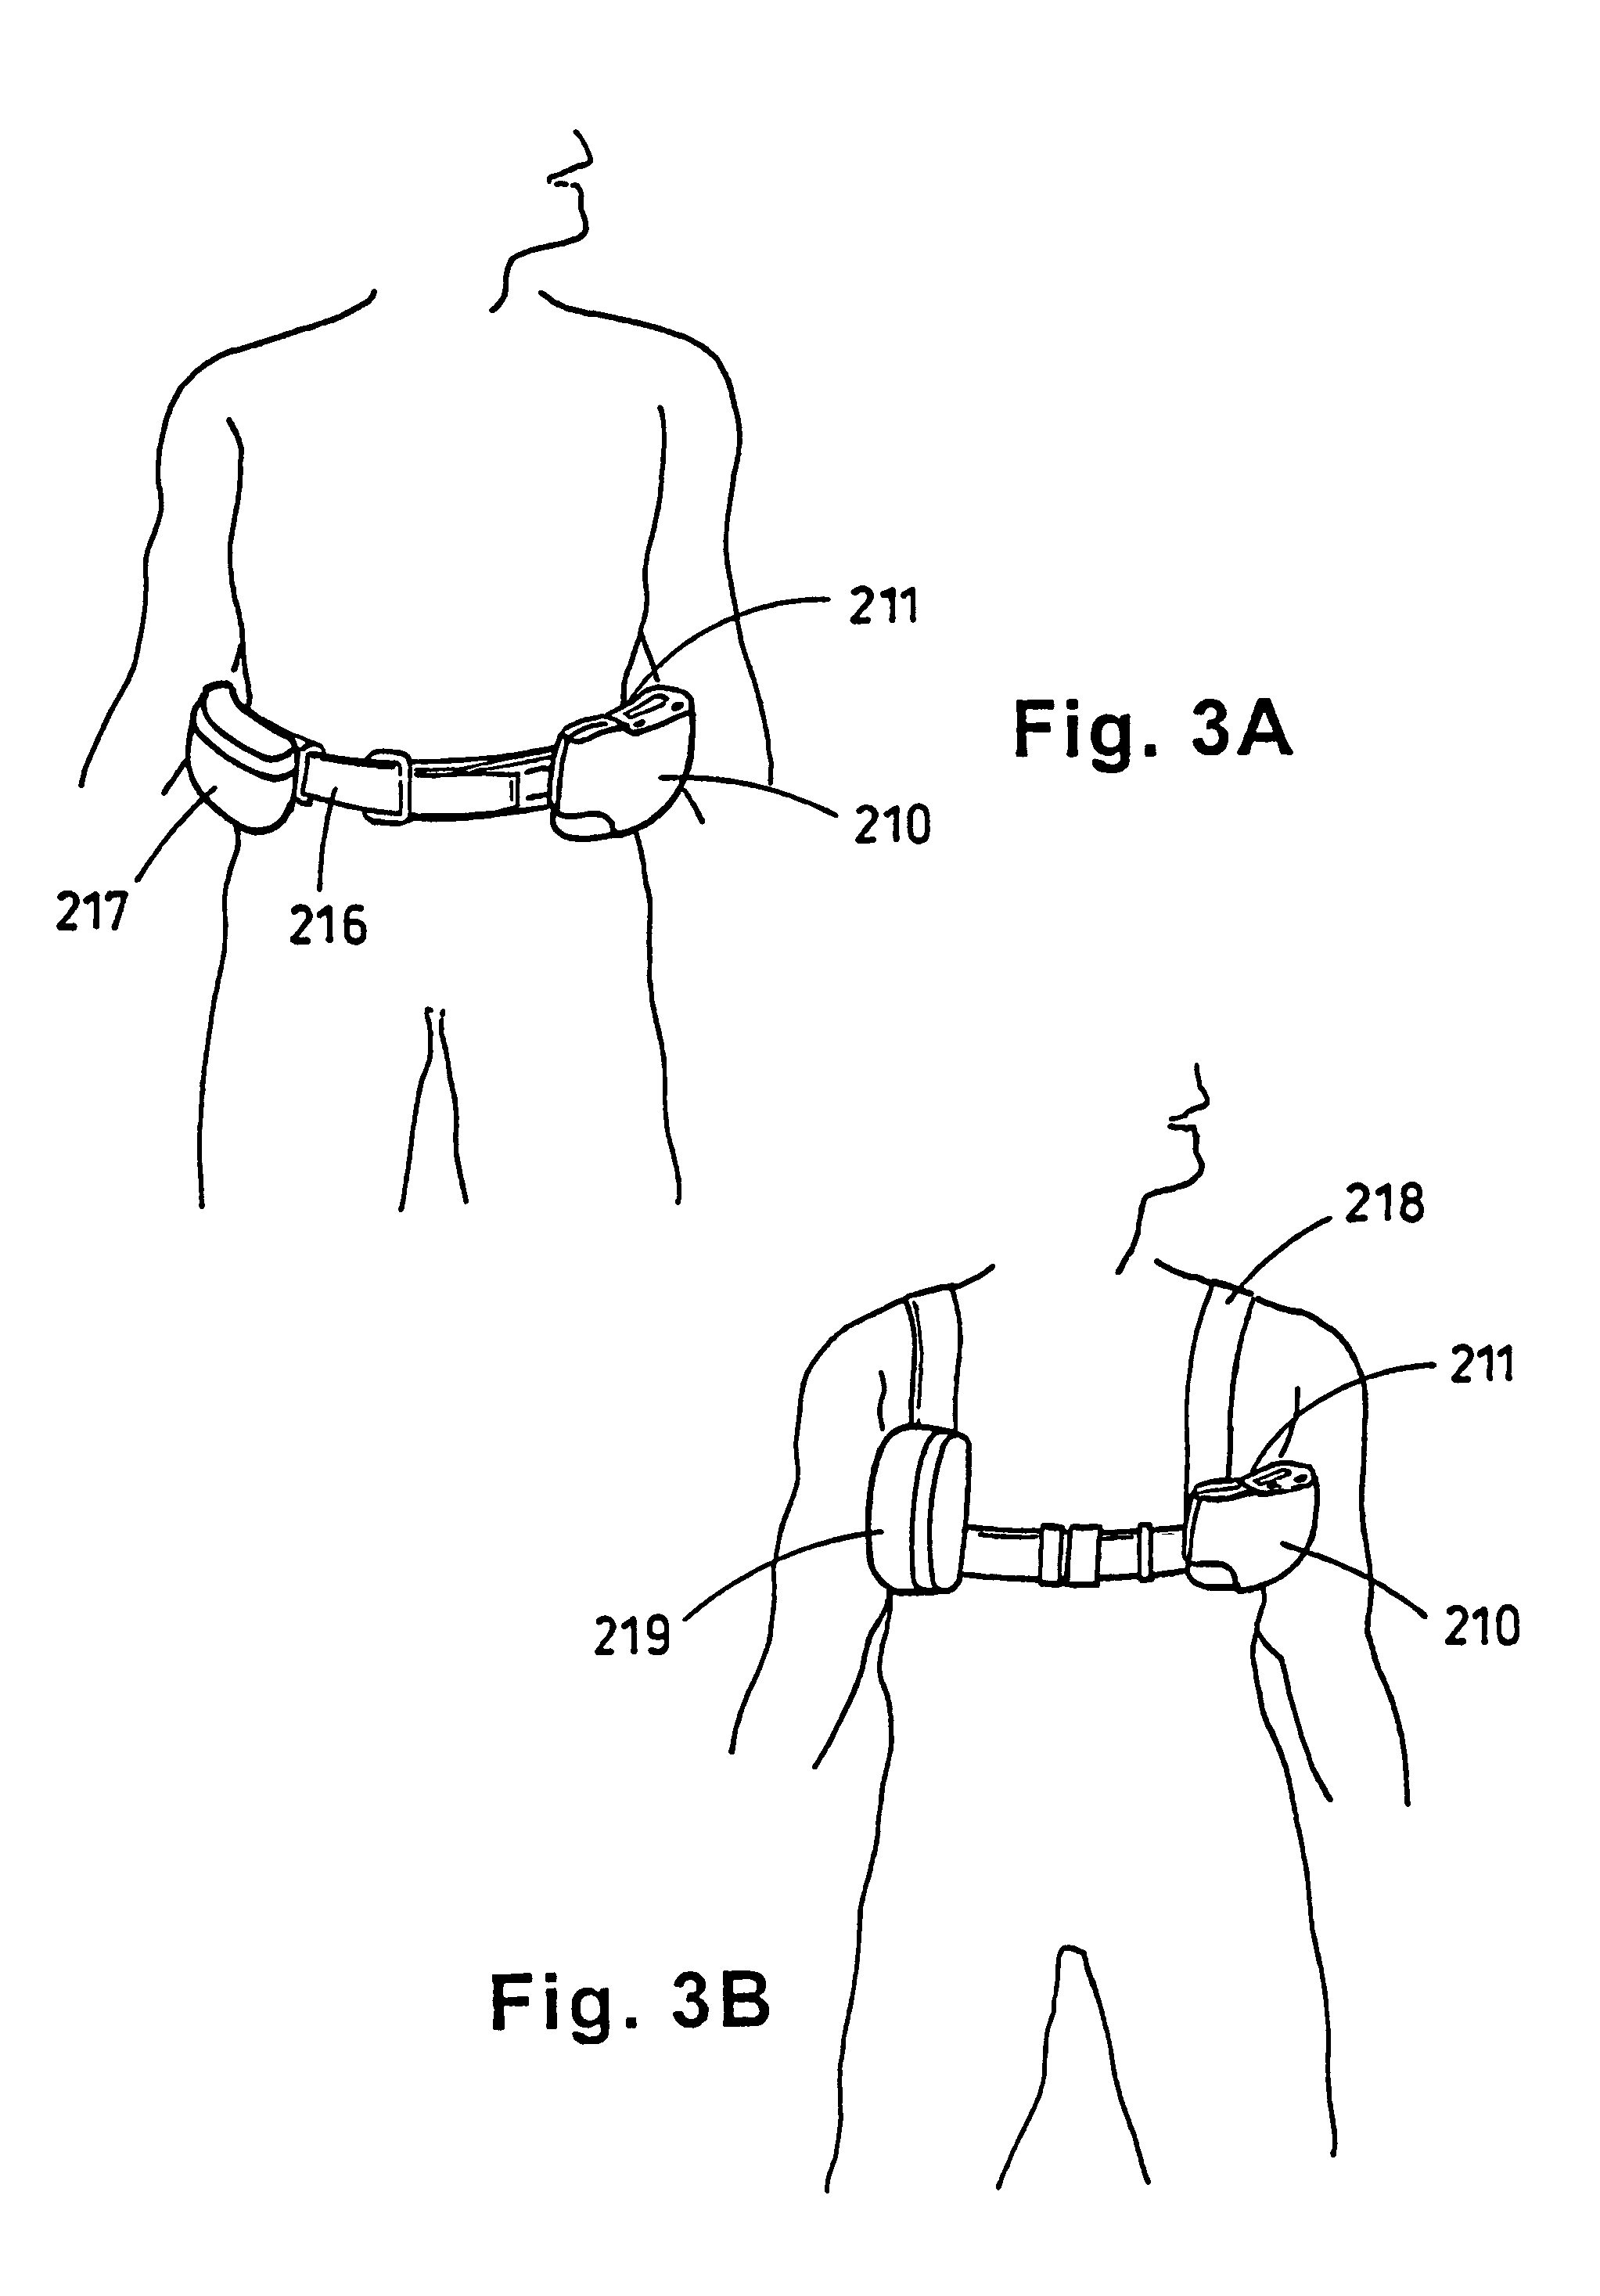 Portable wound treatment apparatus